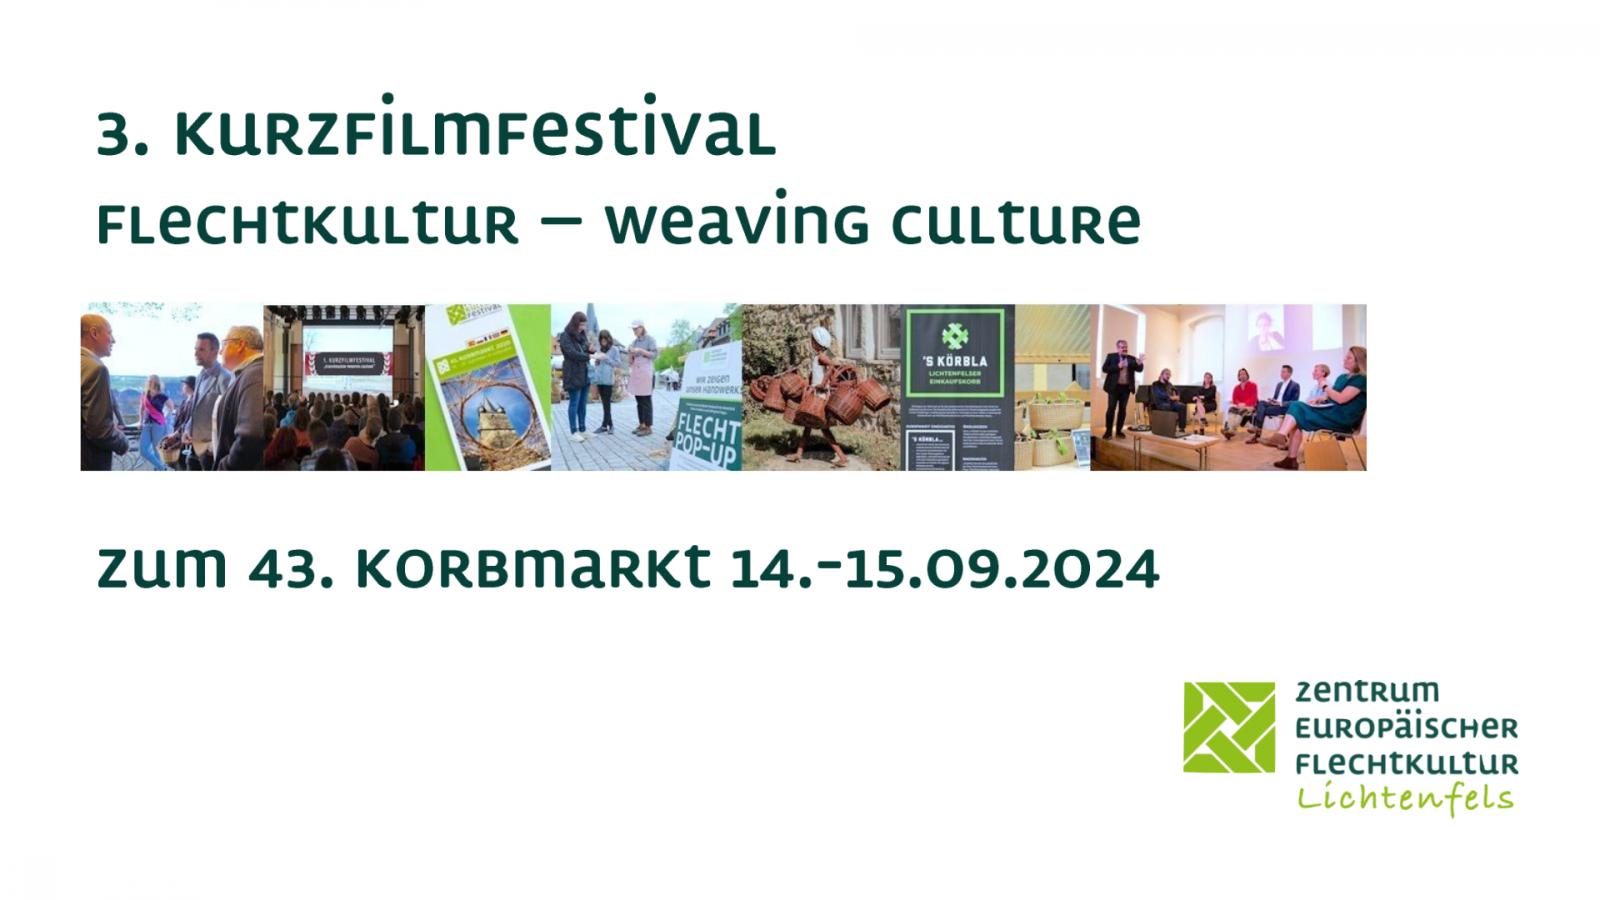 Kurzfilmfestival ,,Flechtkultur  Weaving Culture"